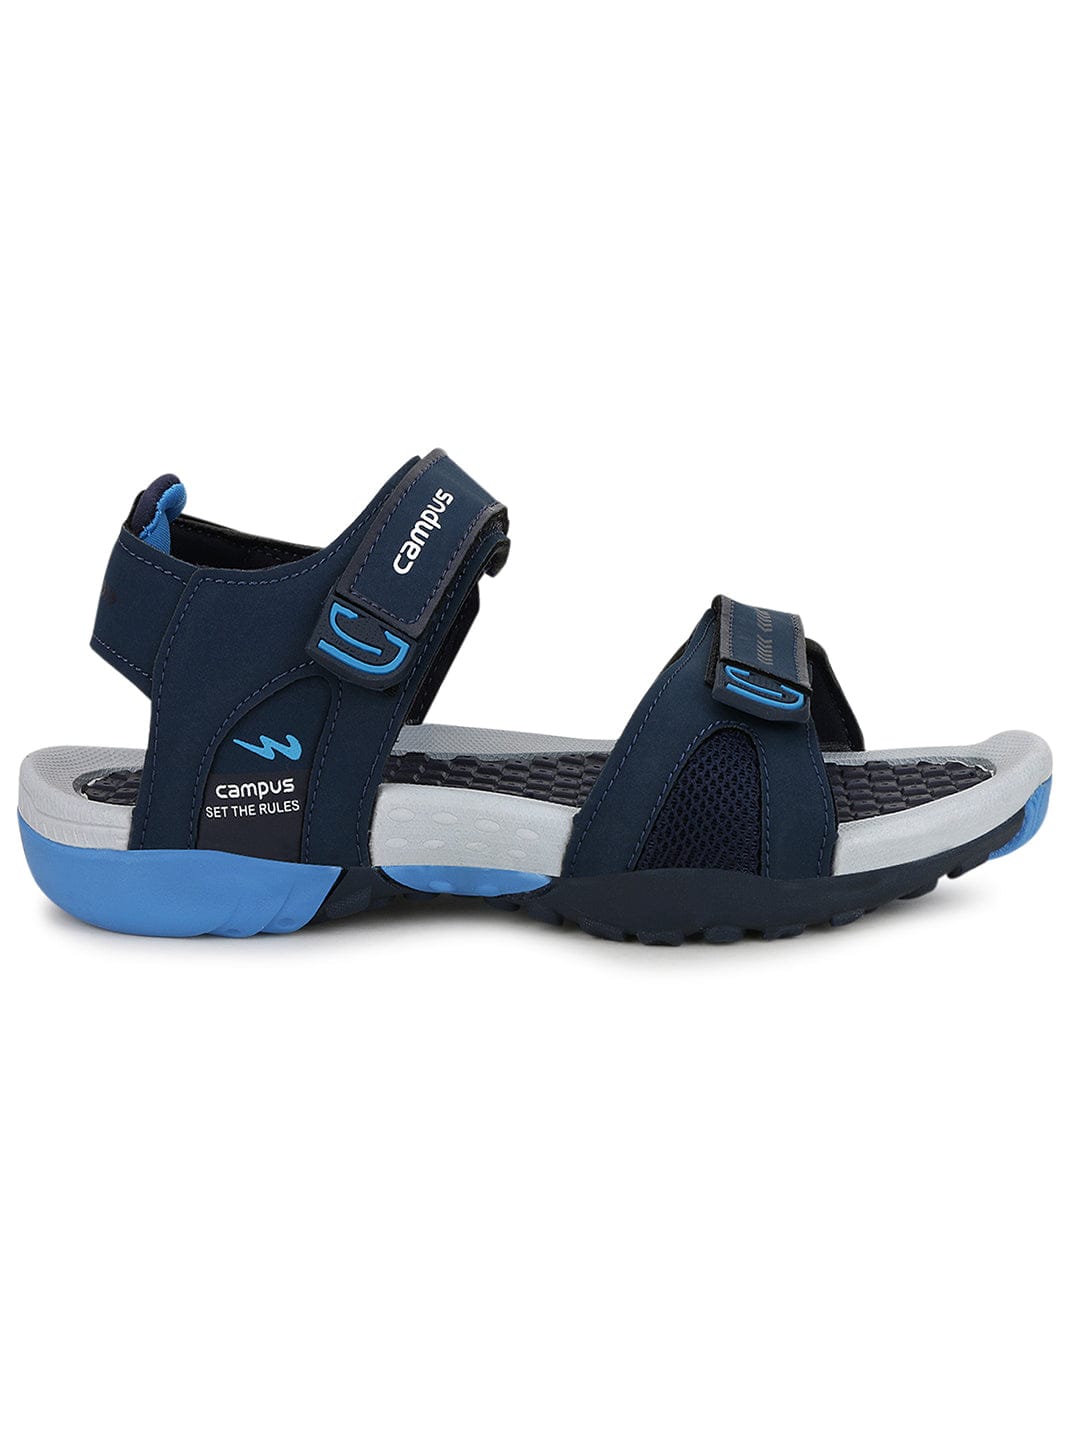 Buy Sandals For Men: 2Gc-18-2Gc-18Navy-Sky749 | Campus Shoes